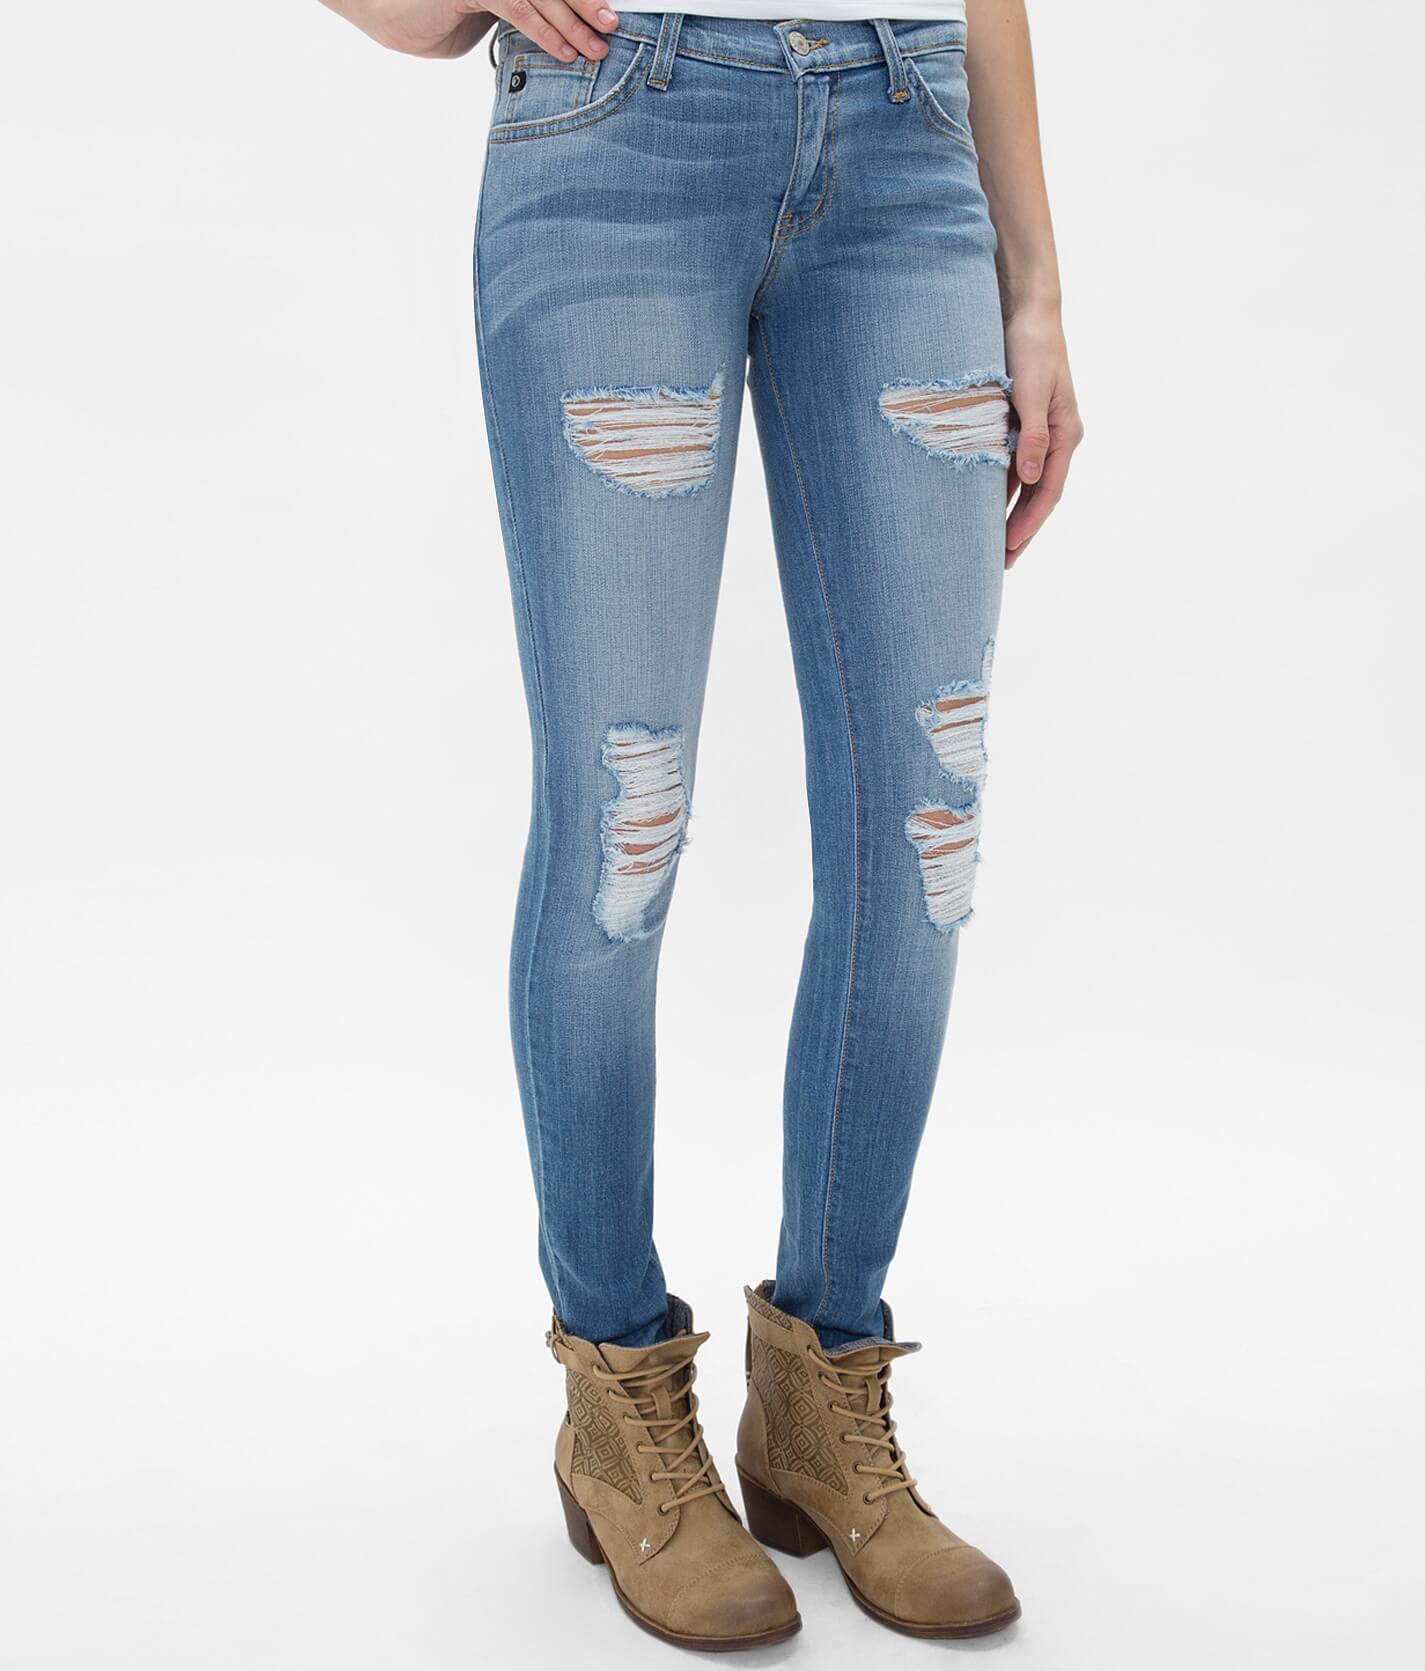 lara jeans price